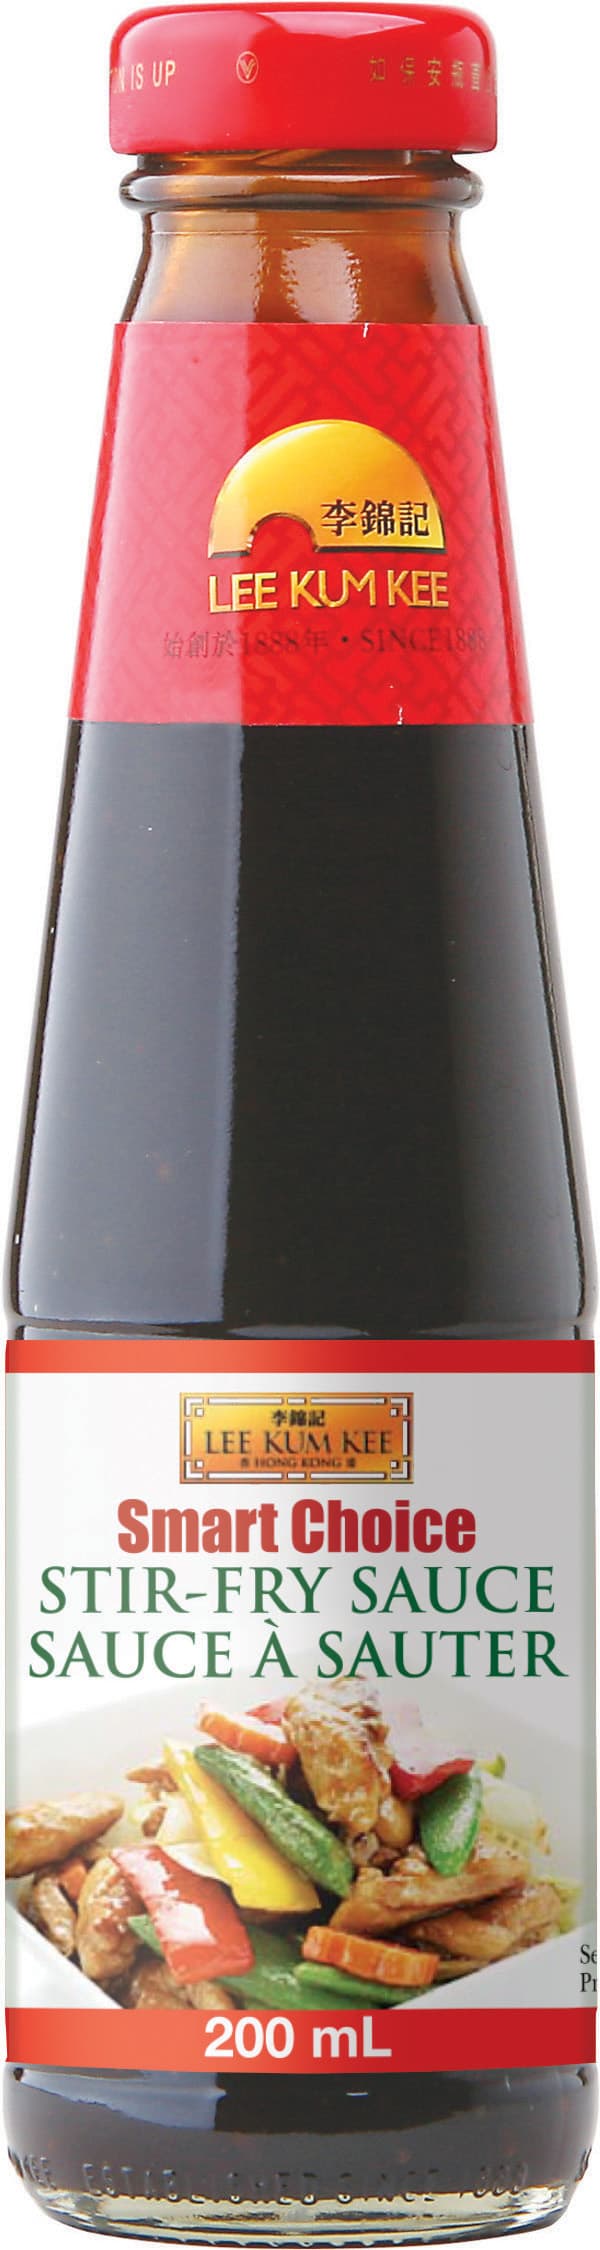 Smart Choice Stir-fry Sauce 200ml 